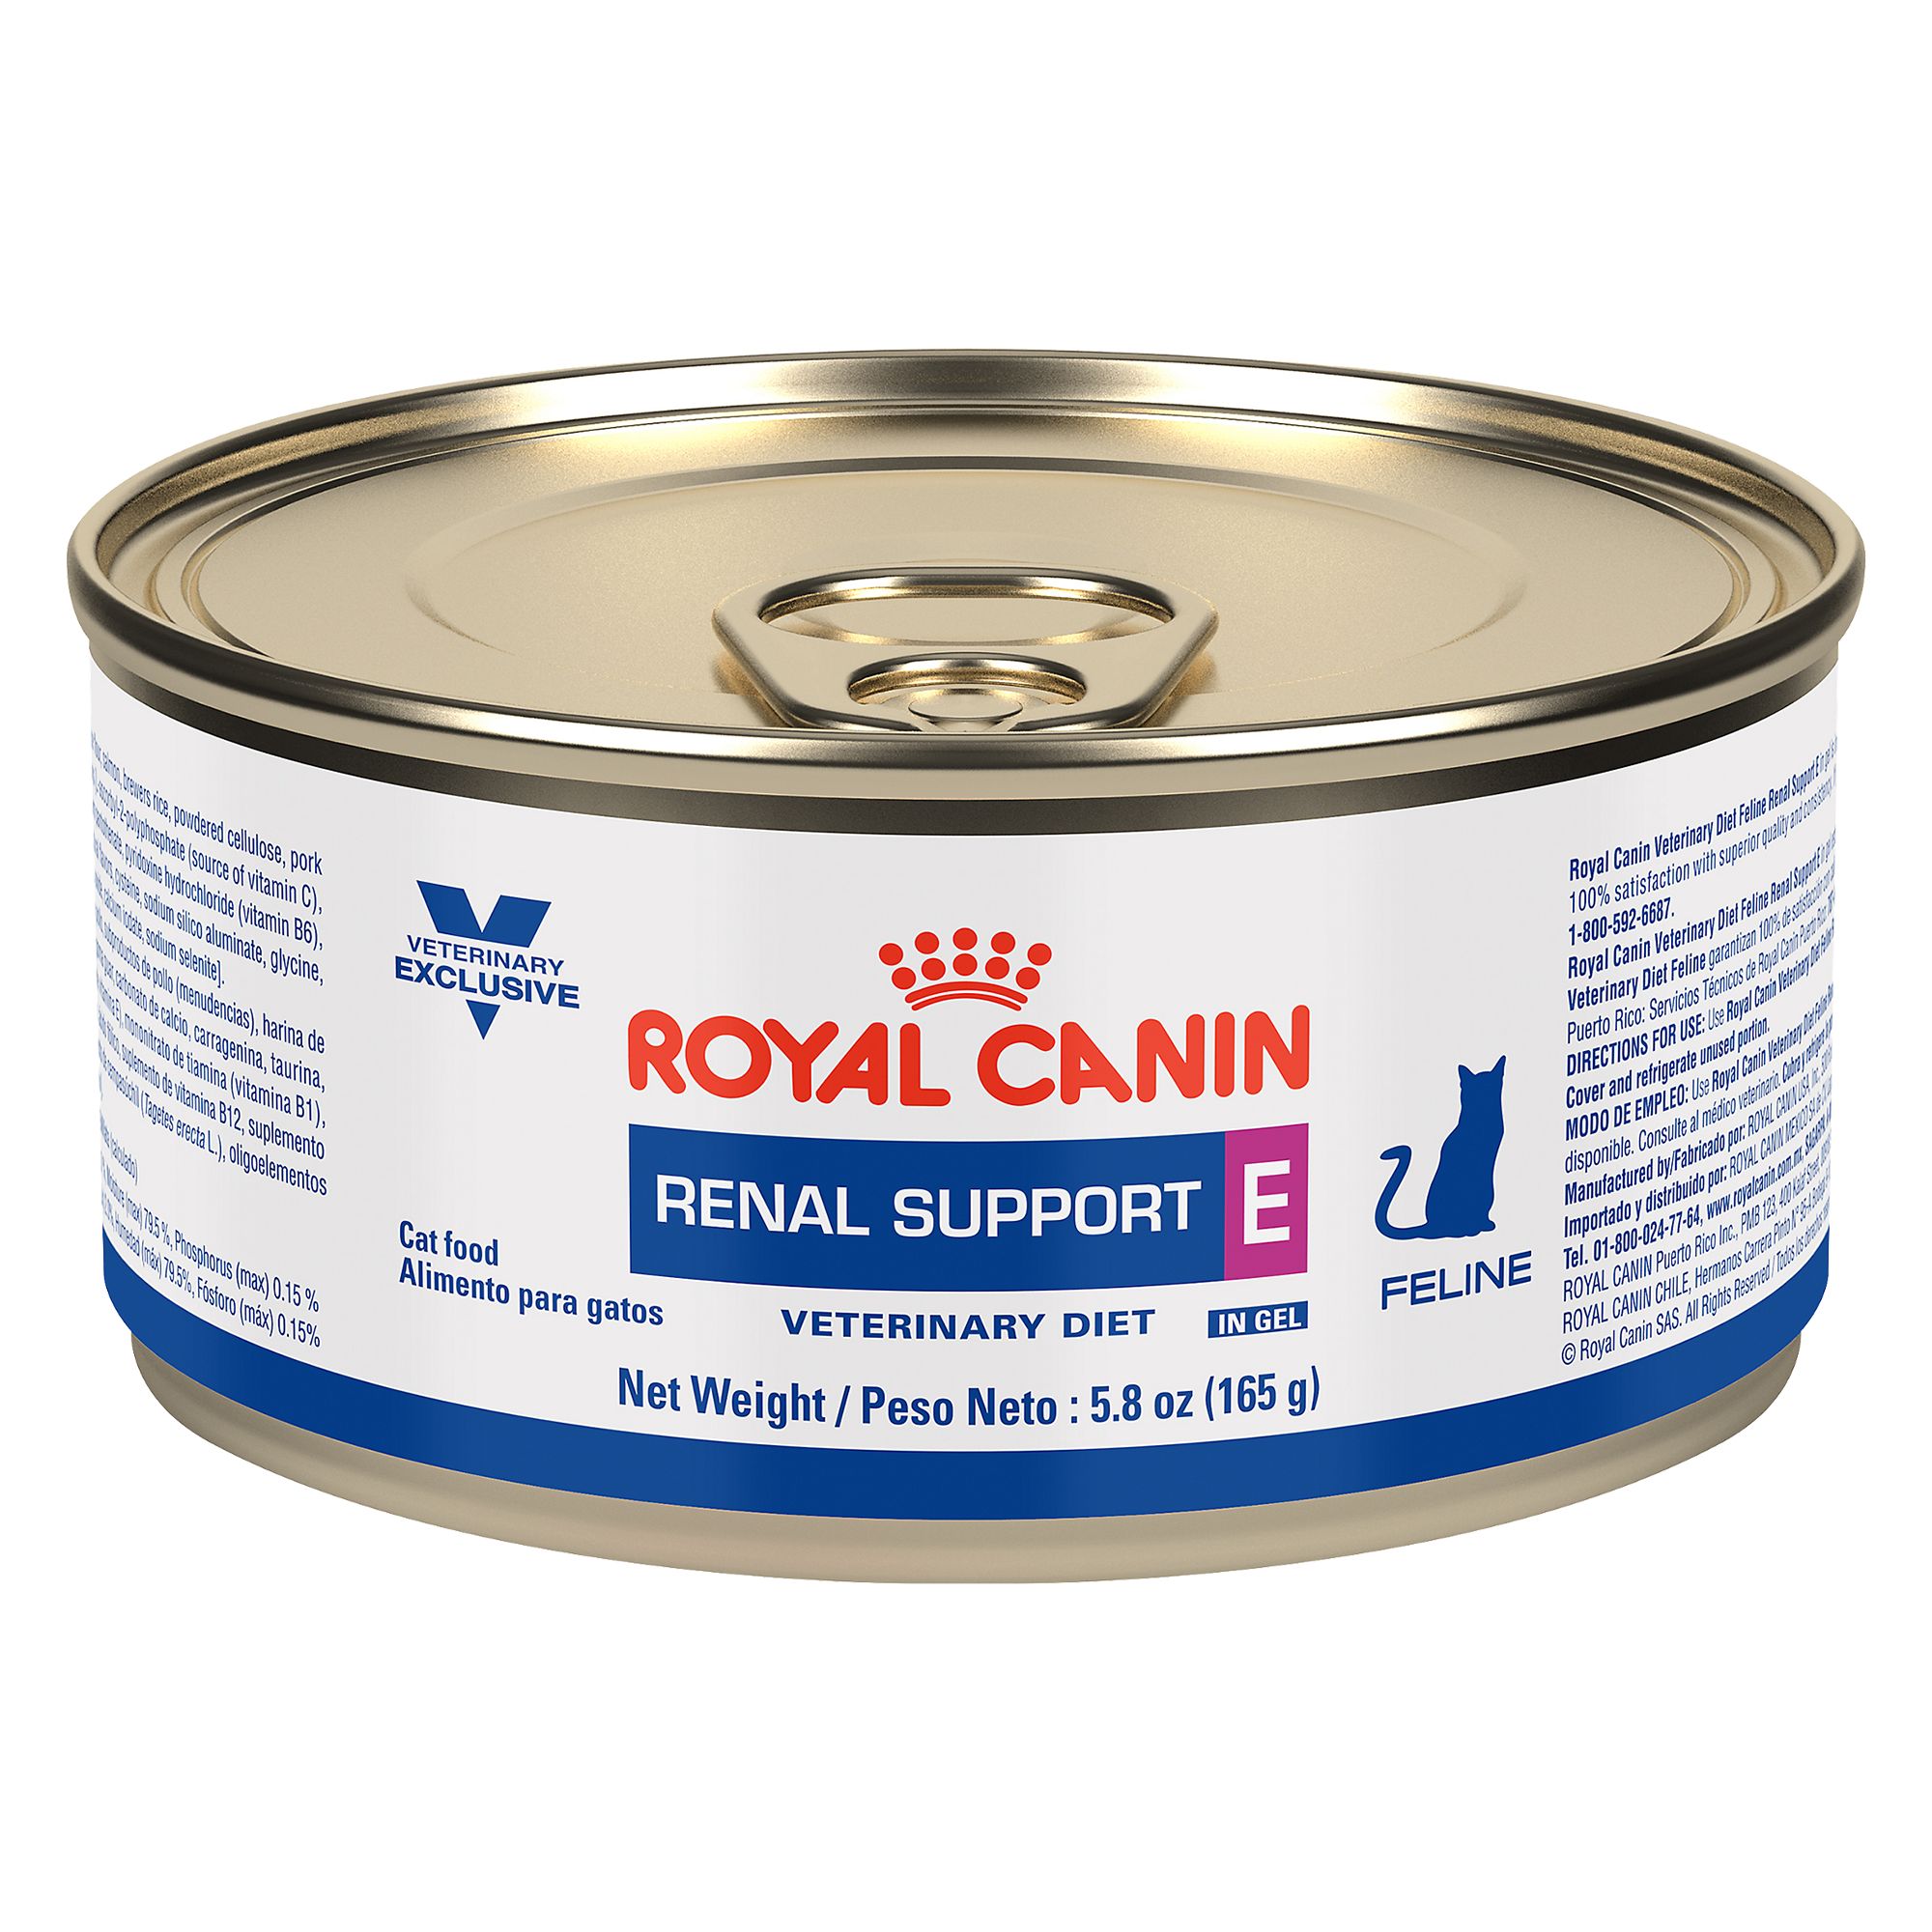 royal canin renal a